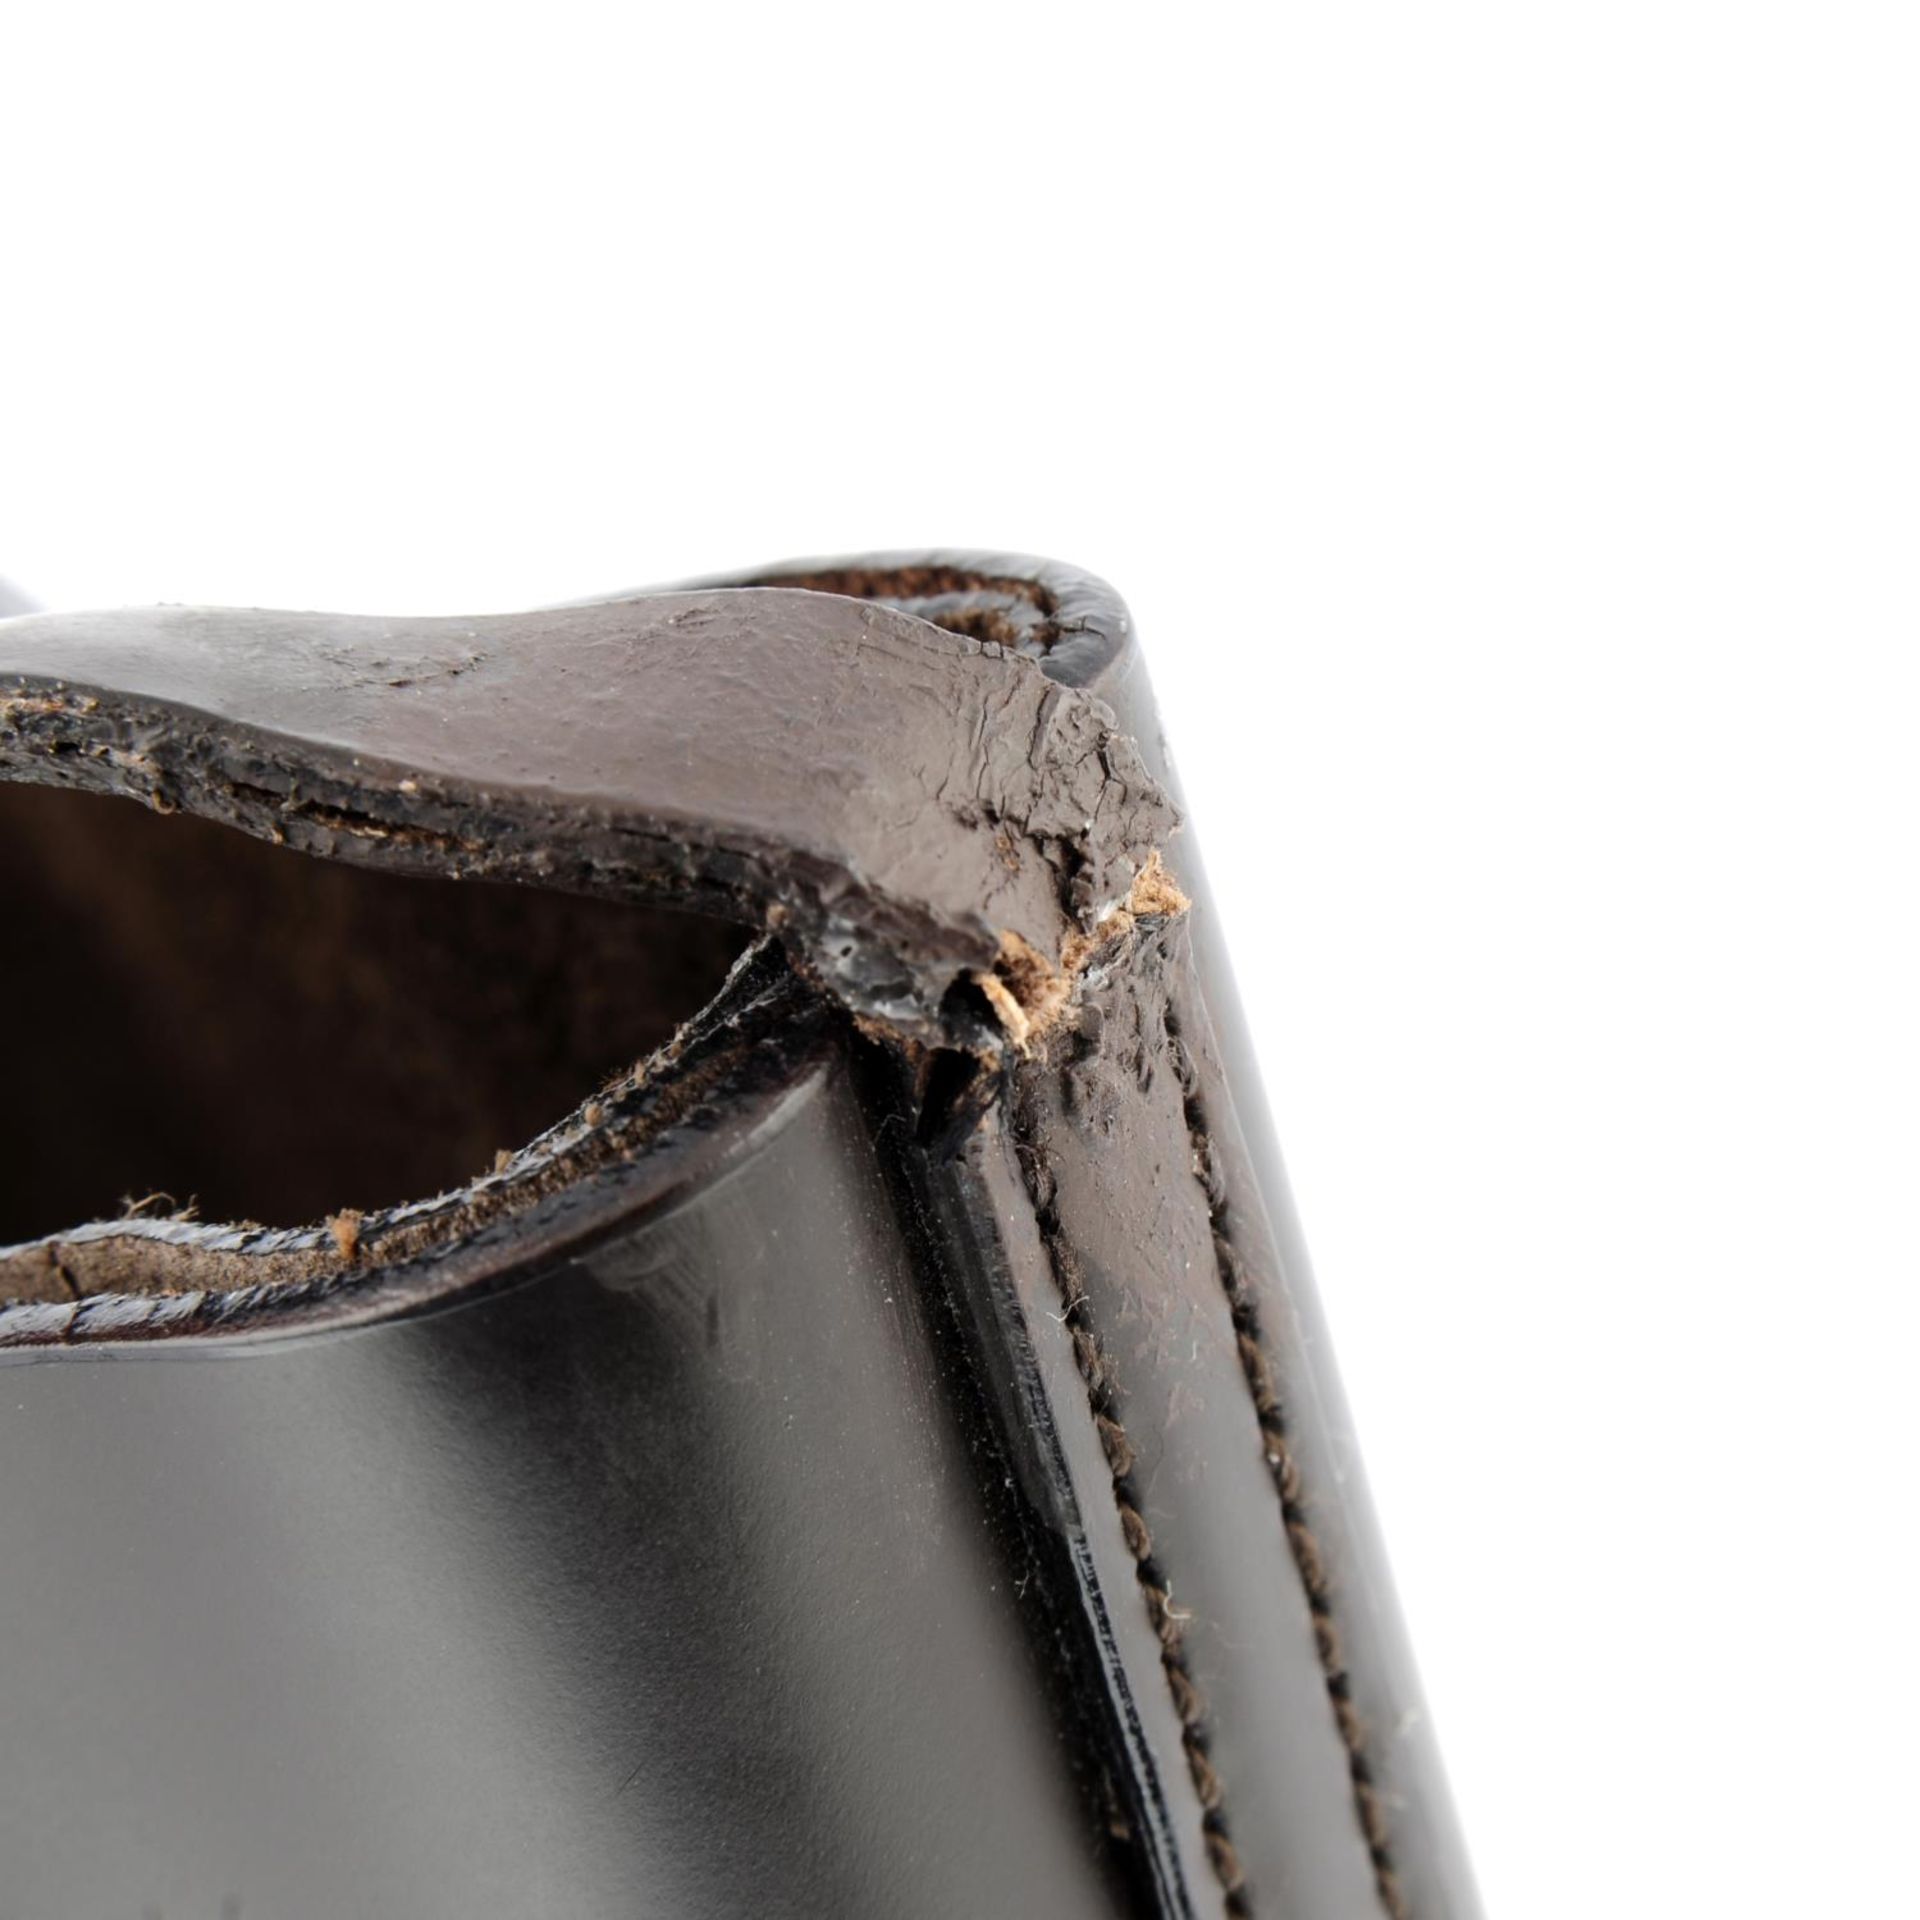 GUCCI - a brown leather handbag. - Image 5 of 5